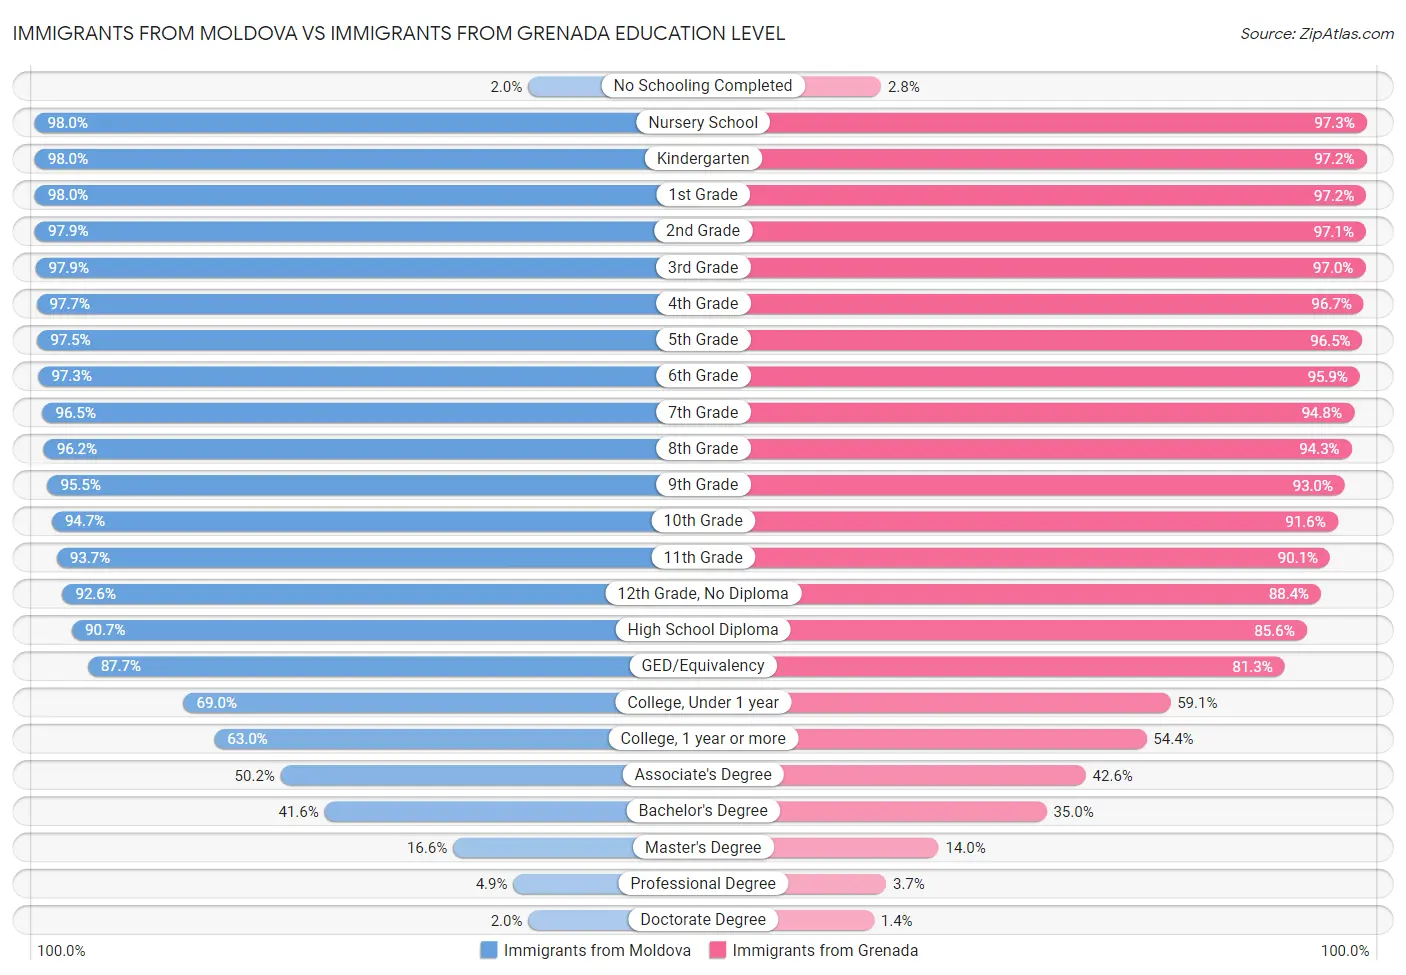 Immigrants from Moldova vs Immigrants from Grenada Education Level